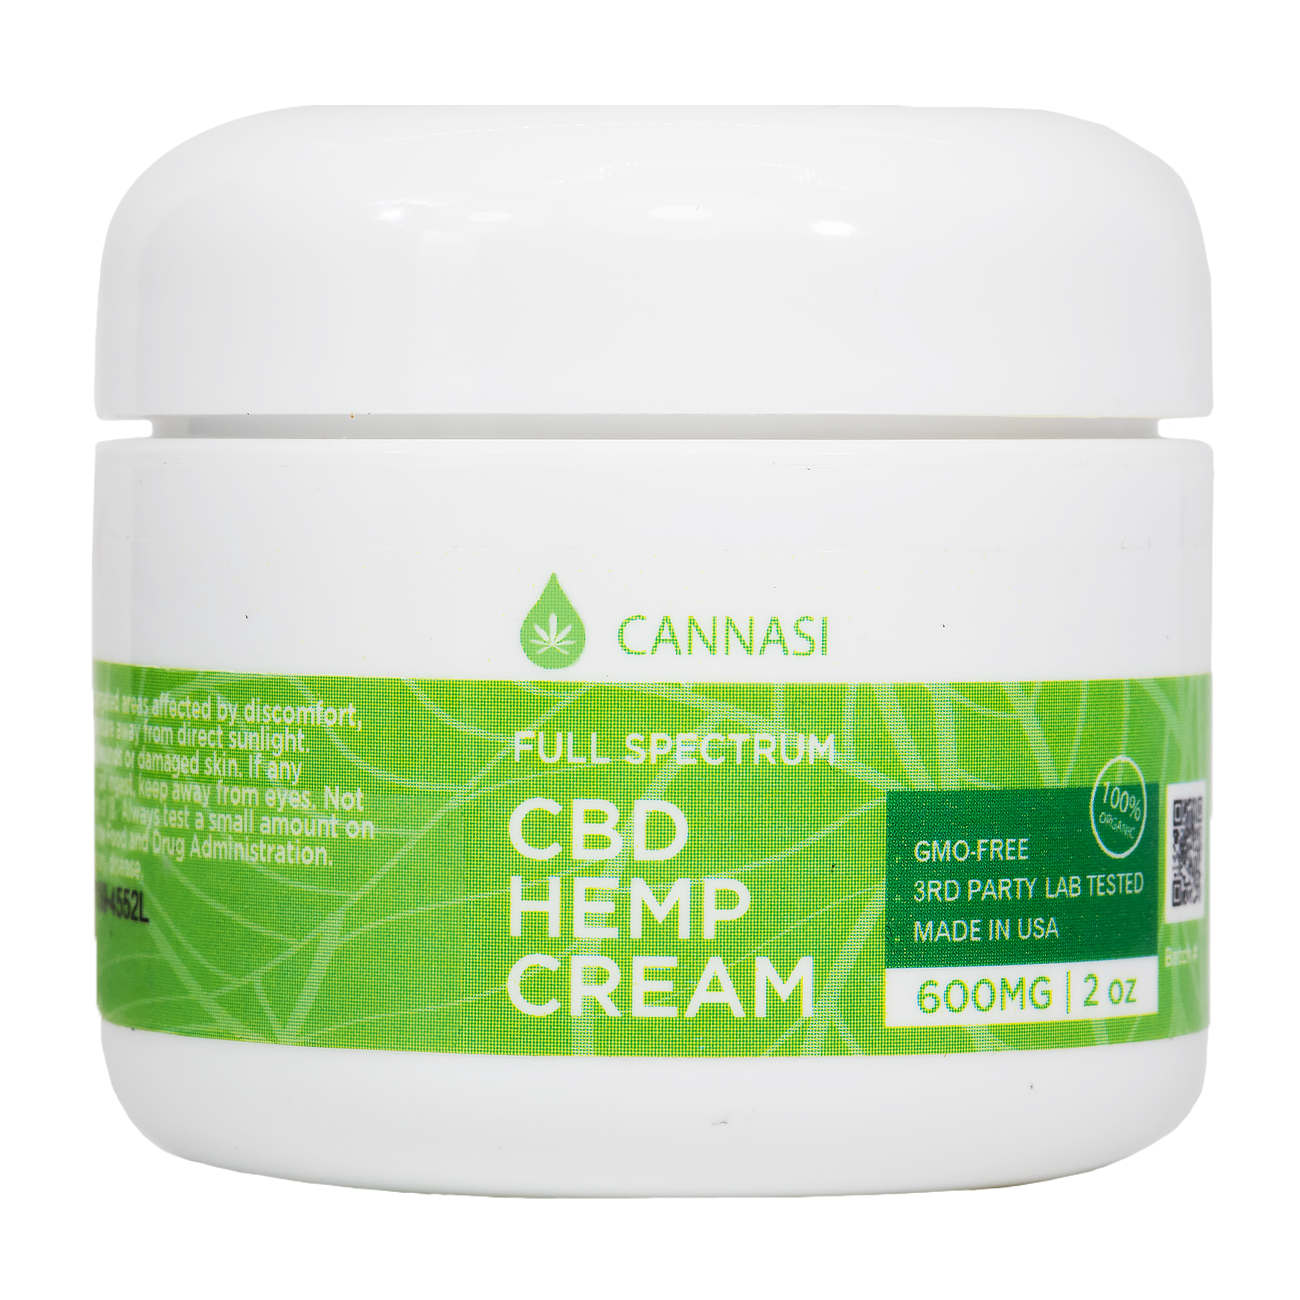 600mg / 2oz CBD Hemp Cream (Full Spectrum) - Cannasi